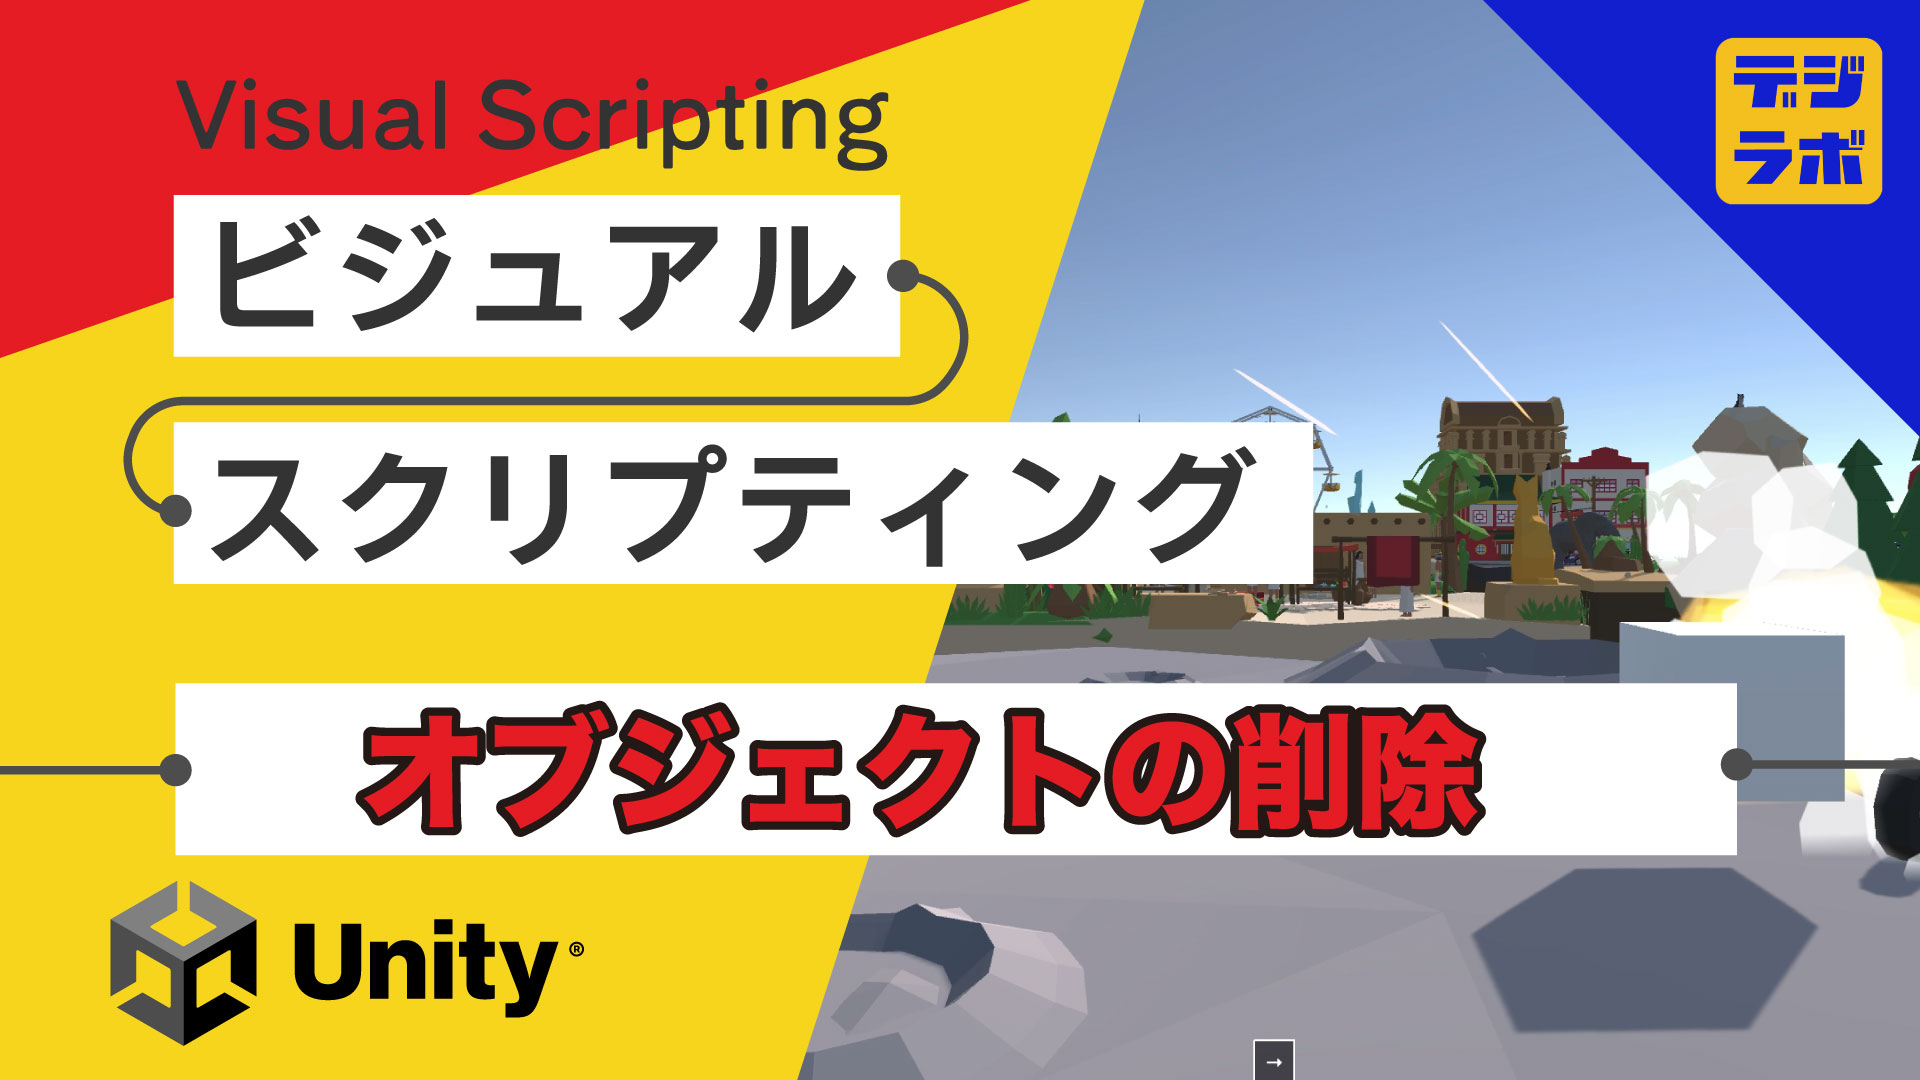 Unity Visual Scripting ビジュアルスクリプティング オブジェクトの削除 デジラボ